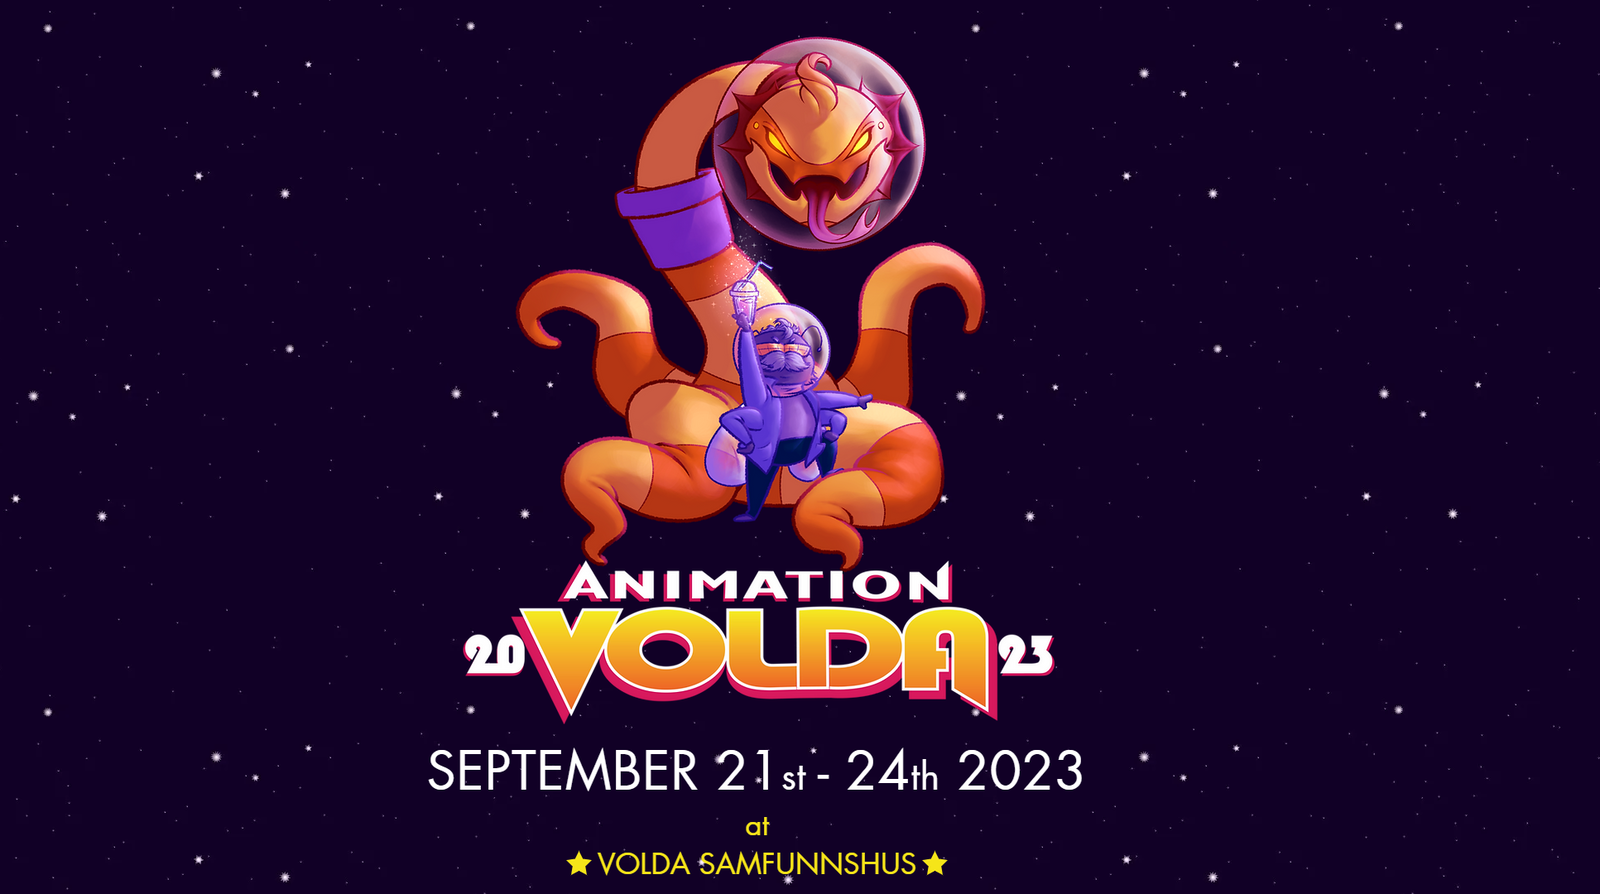 Animation Volda 2023